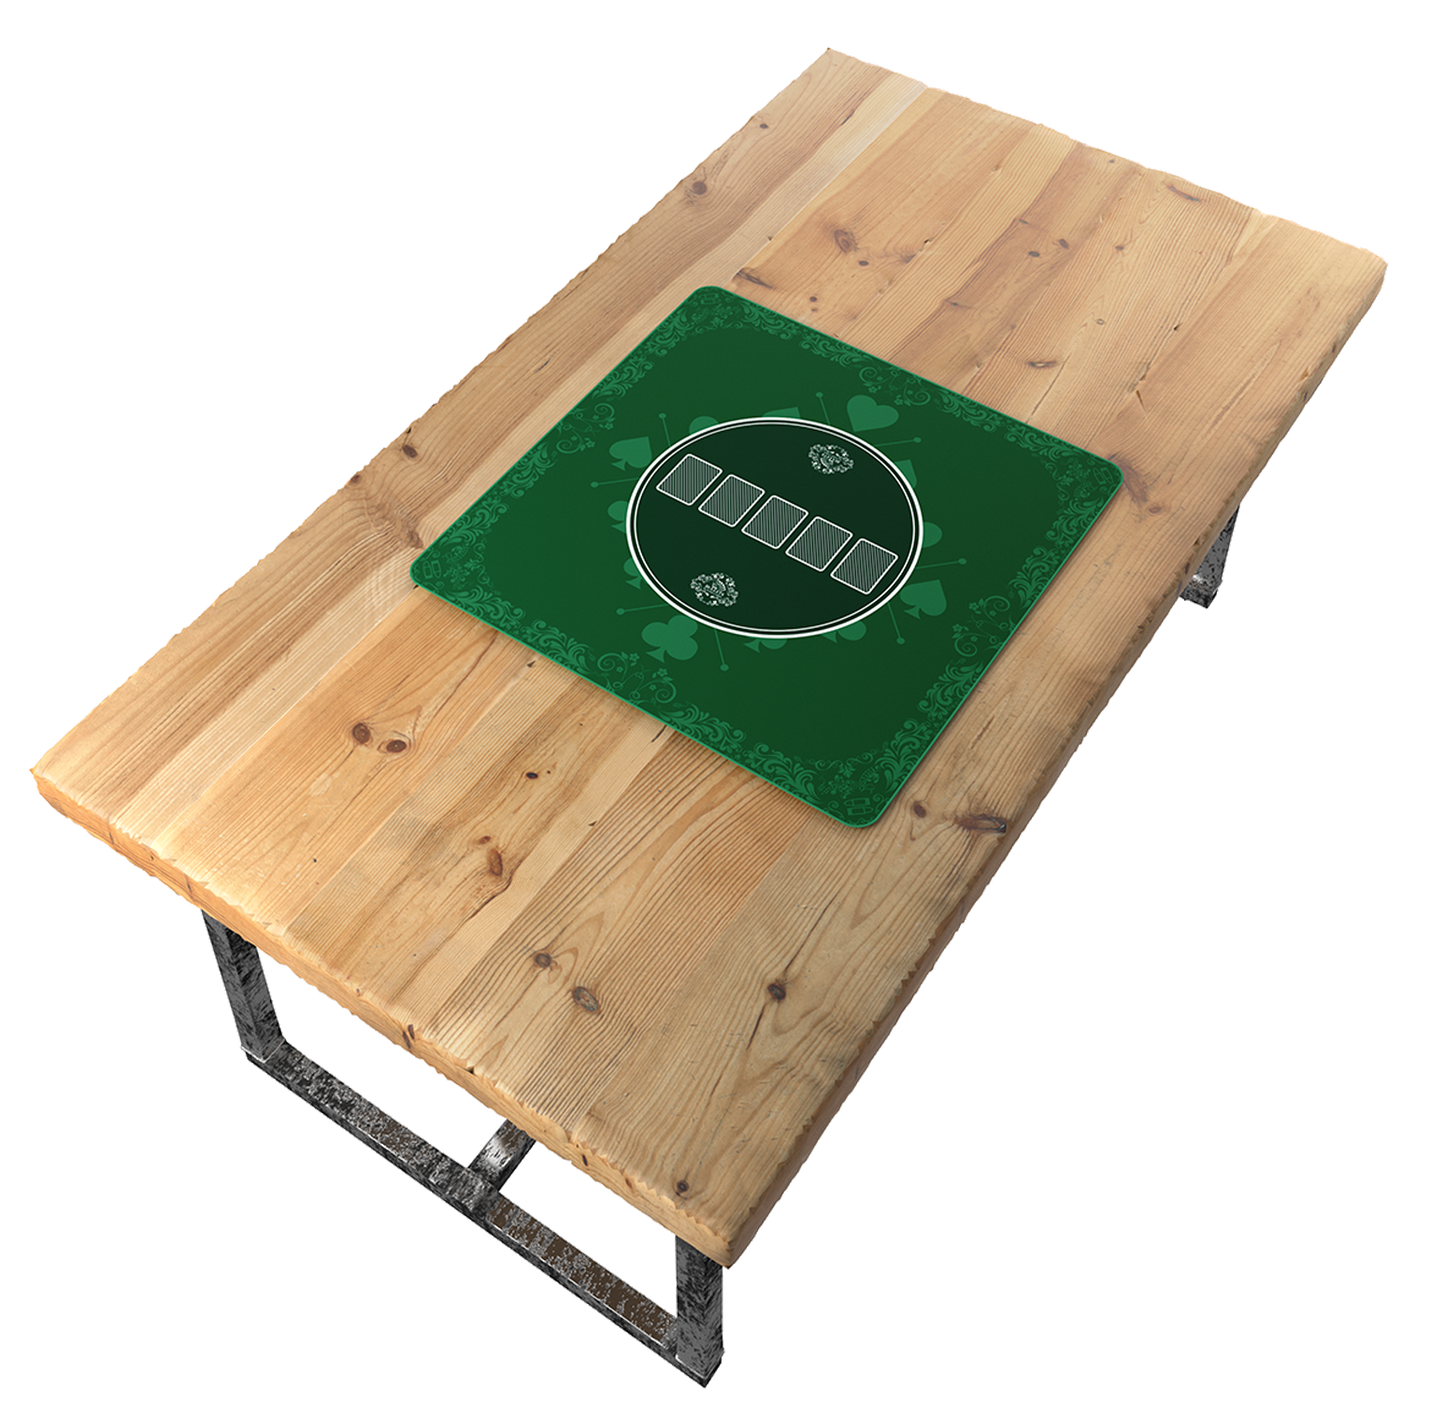 Pokermatte 80x80 cm, eckig, grün, Designer "Heads-Up"